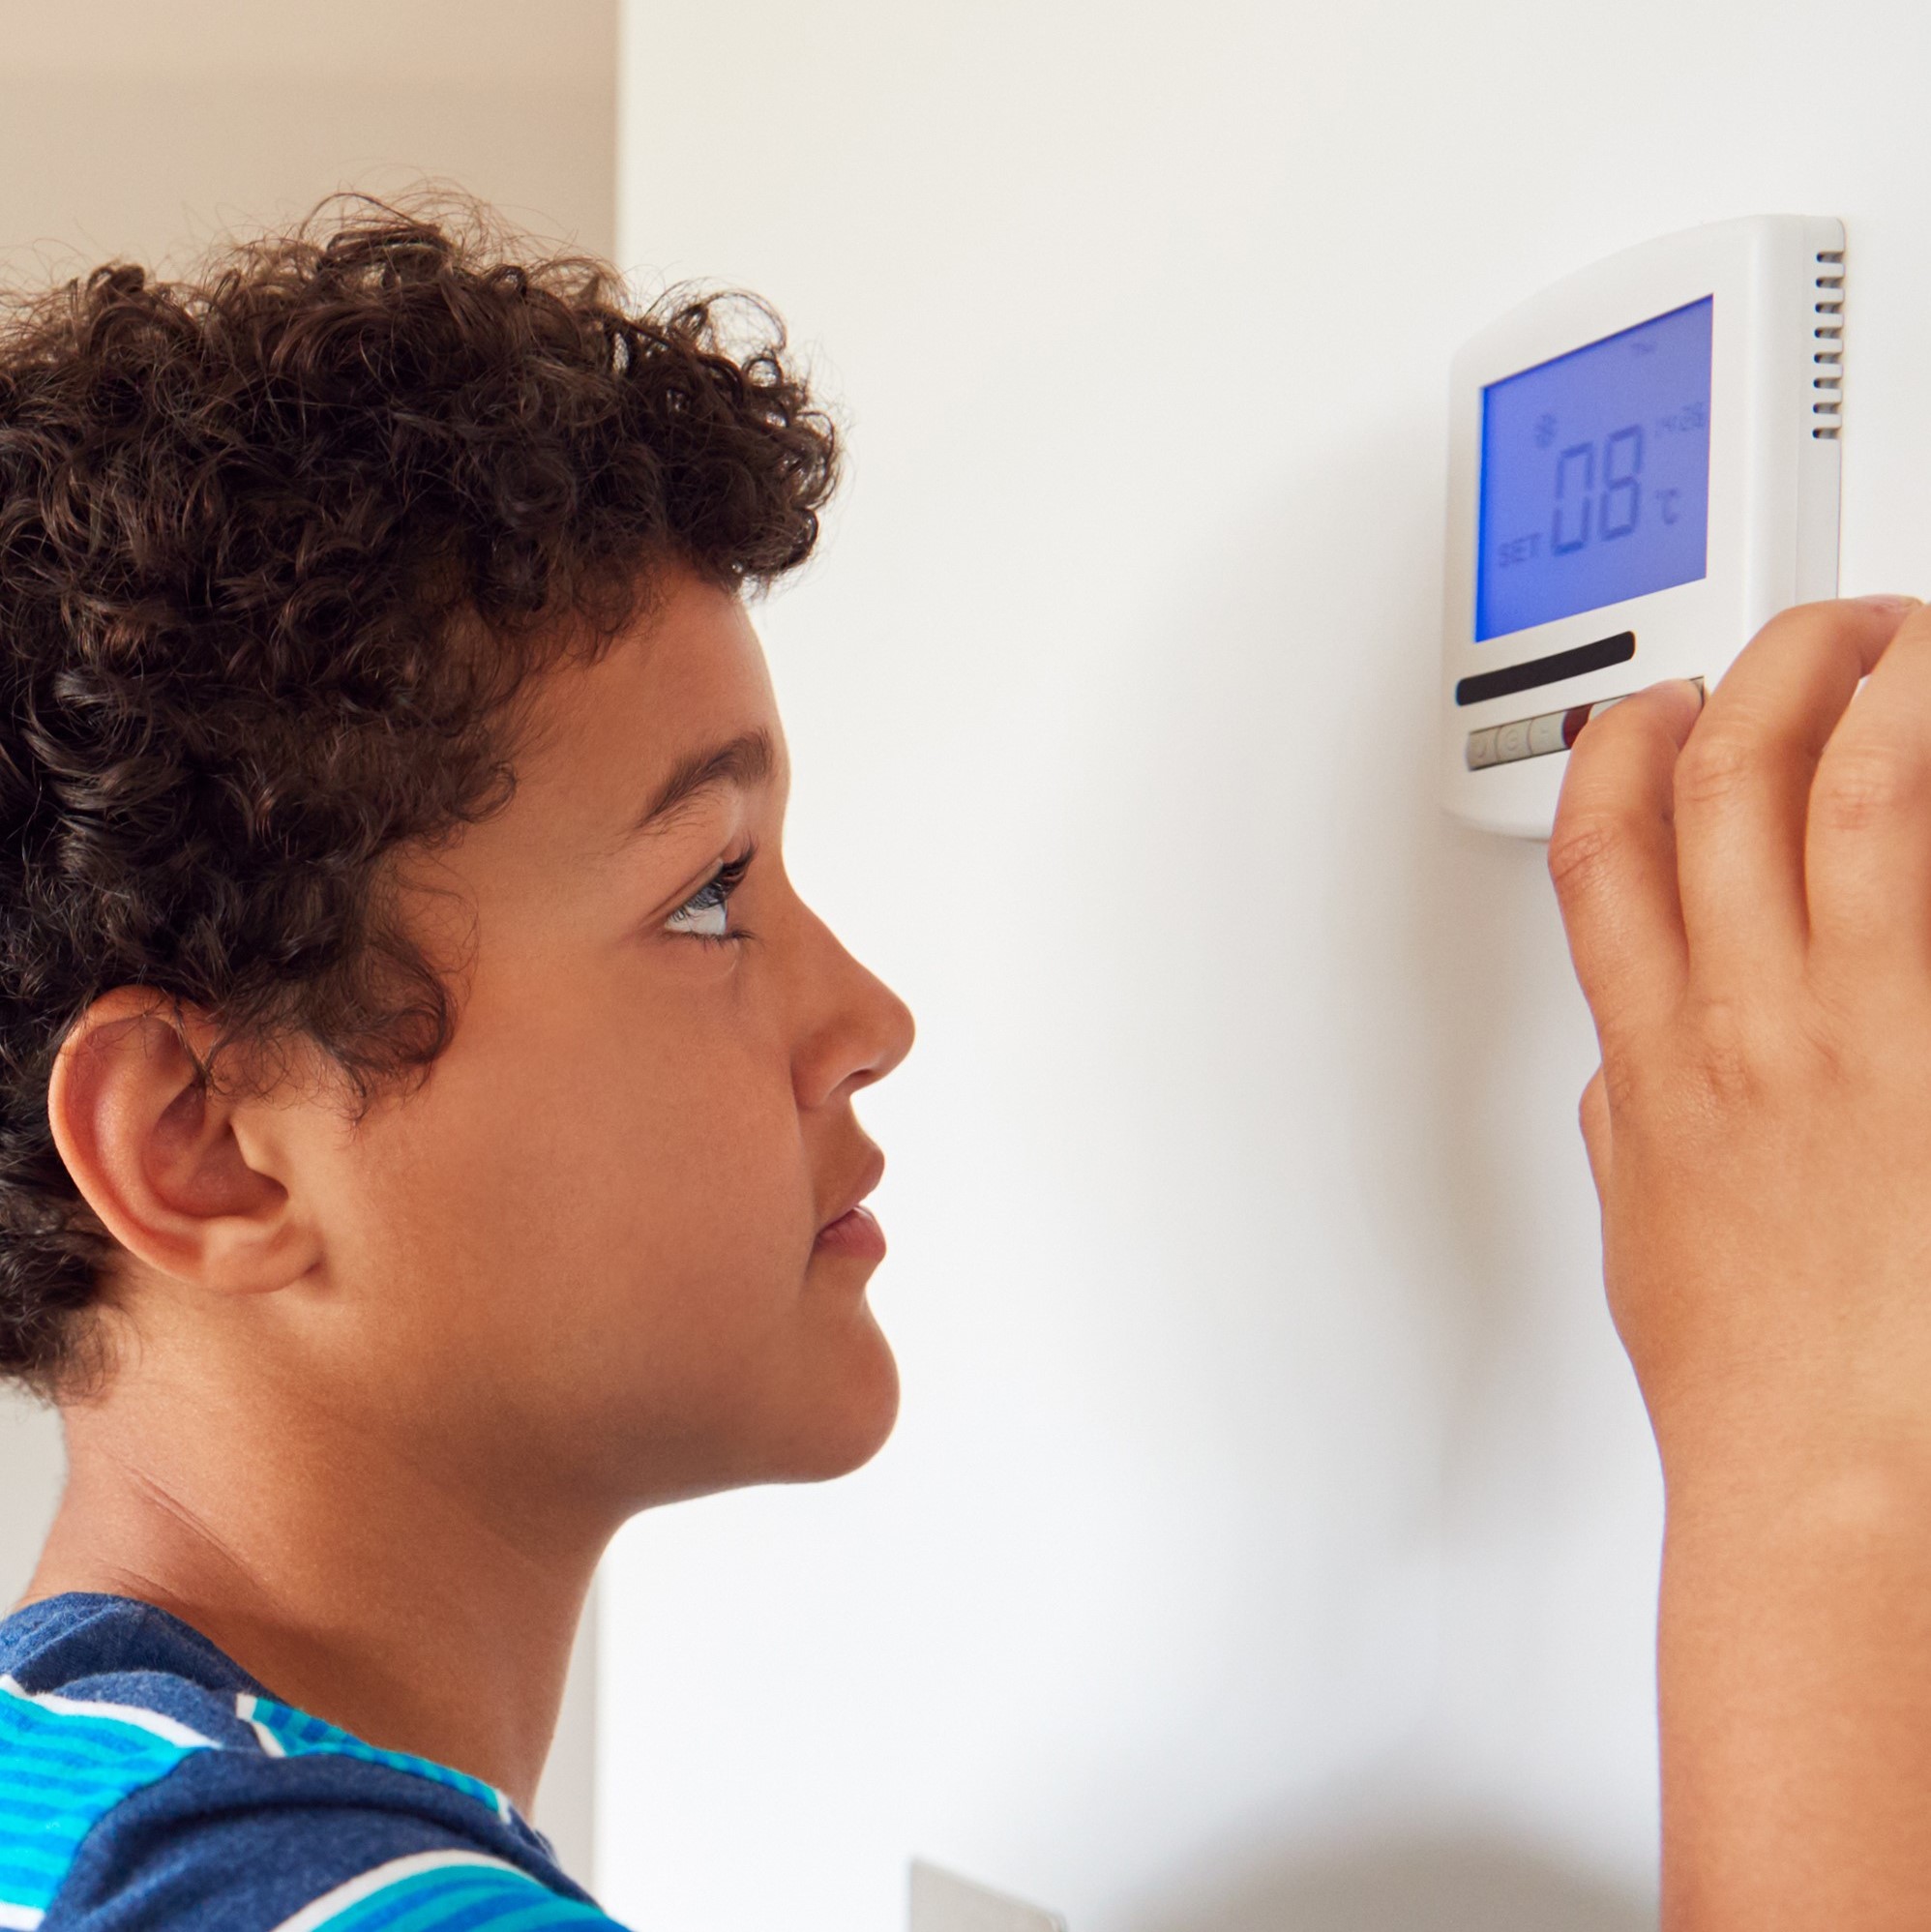 boy adjusting home thermostat